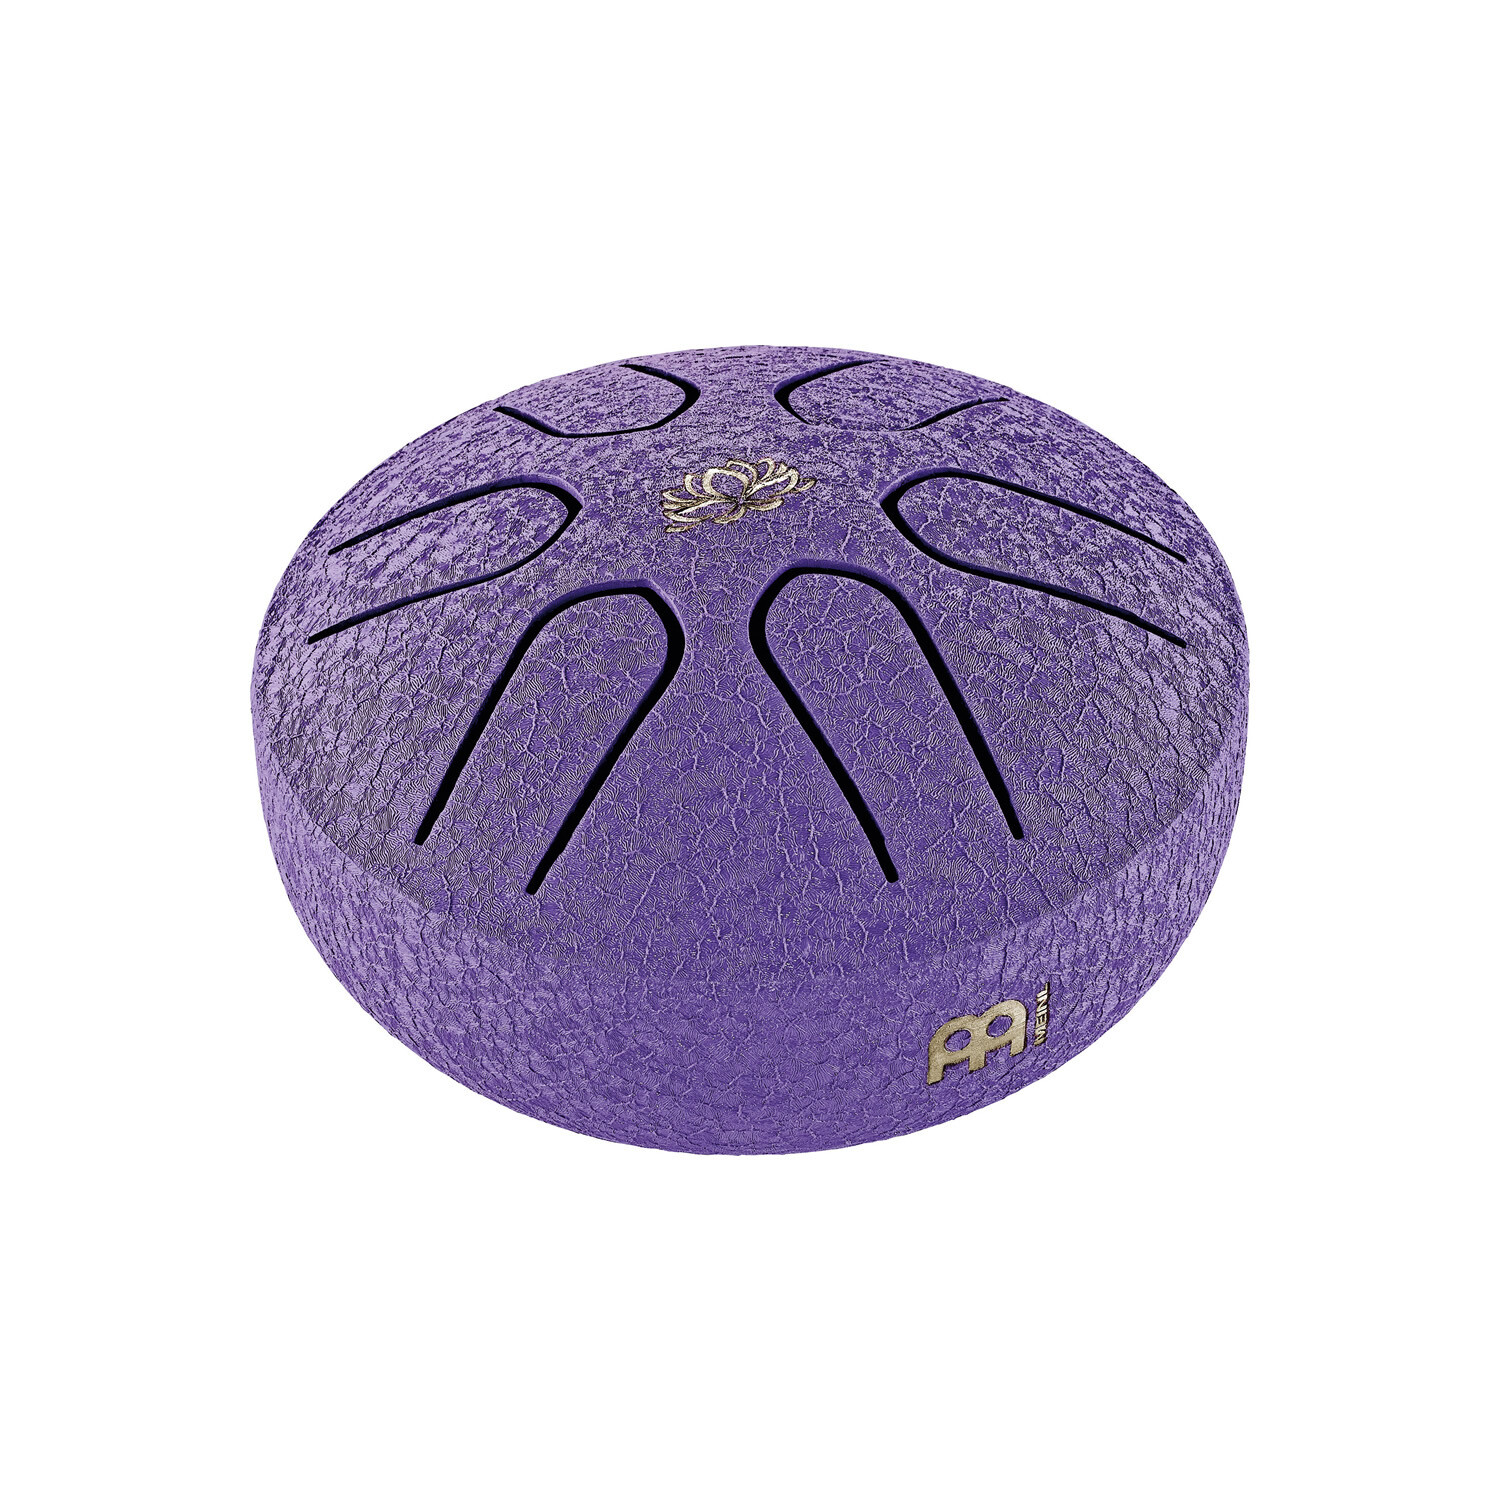 Pocket Steel Tongue Drum - Purple, Lotus Flower - A Major